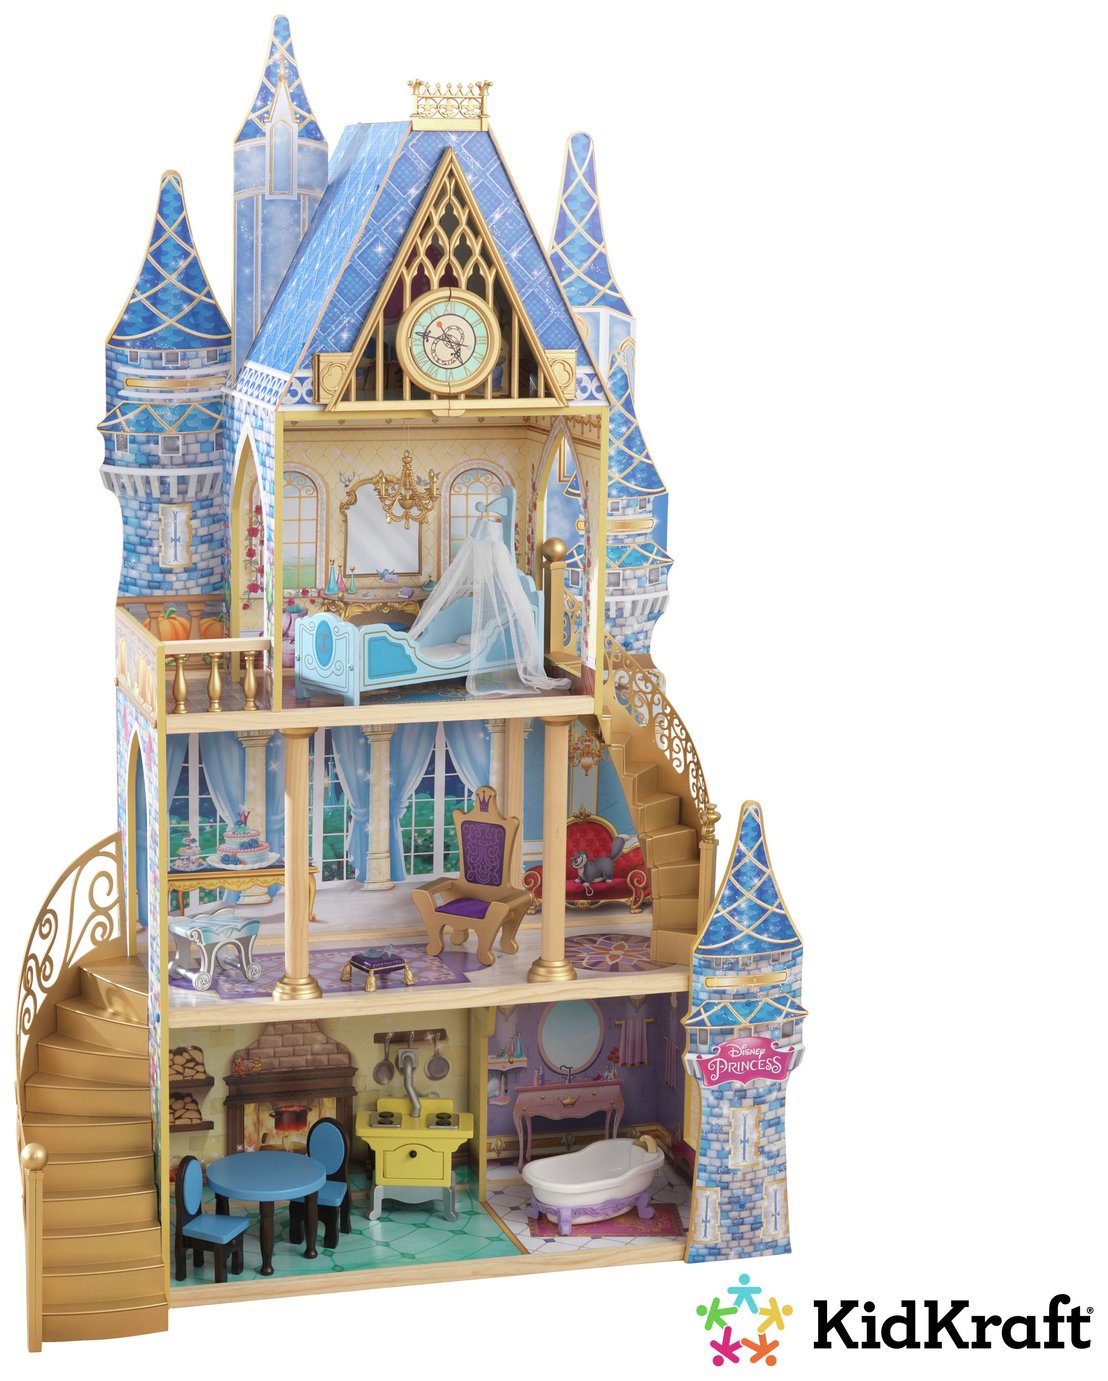 KidKraft Disney Princess Cinderella Royal Dream Dolls House